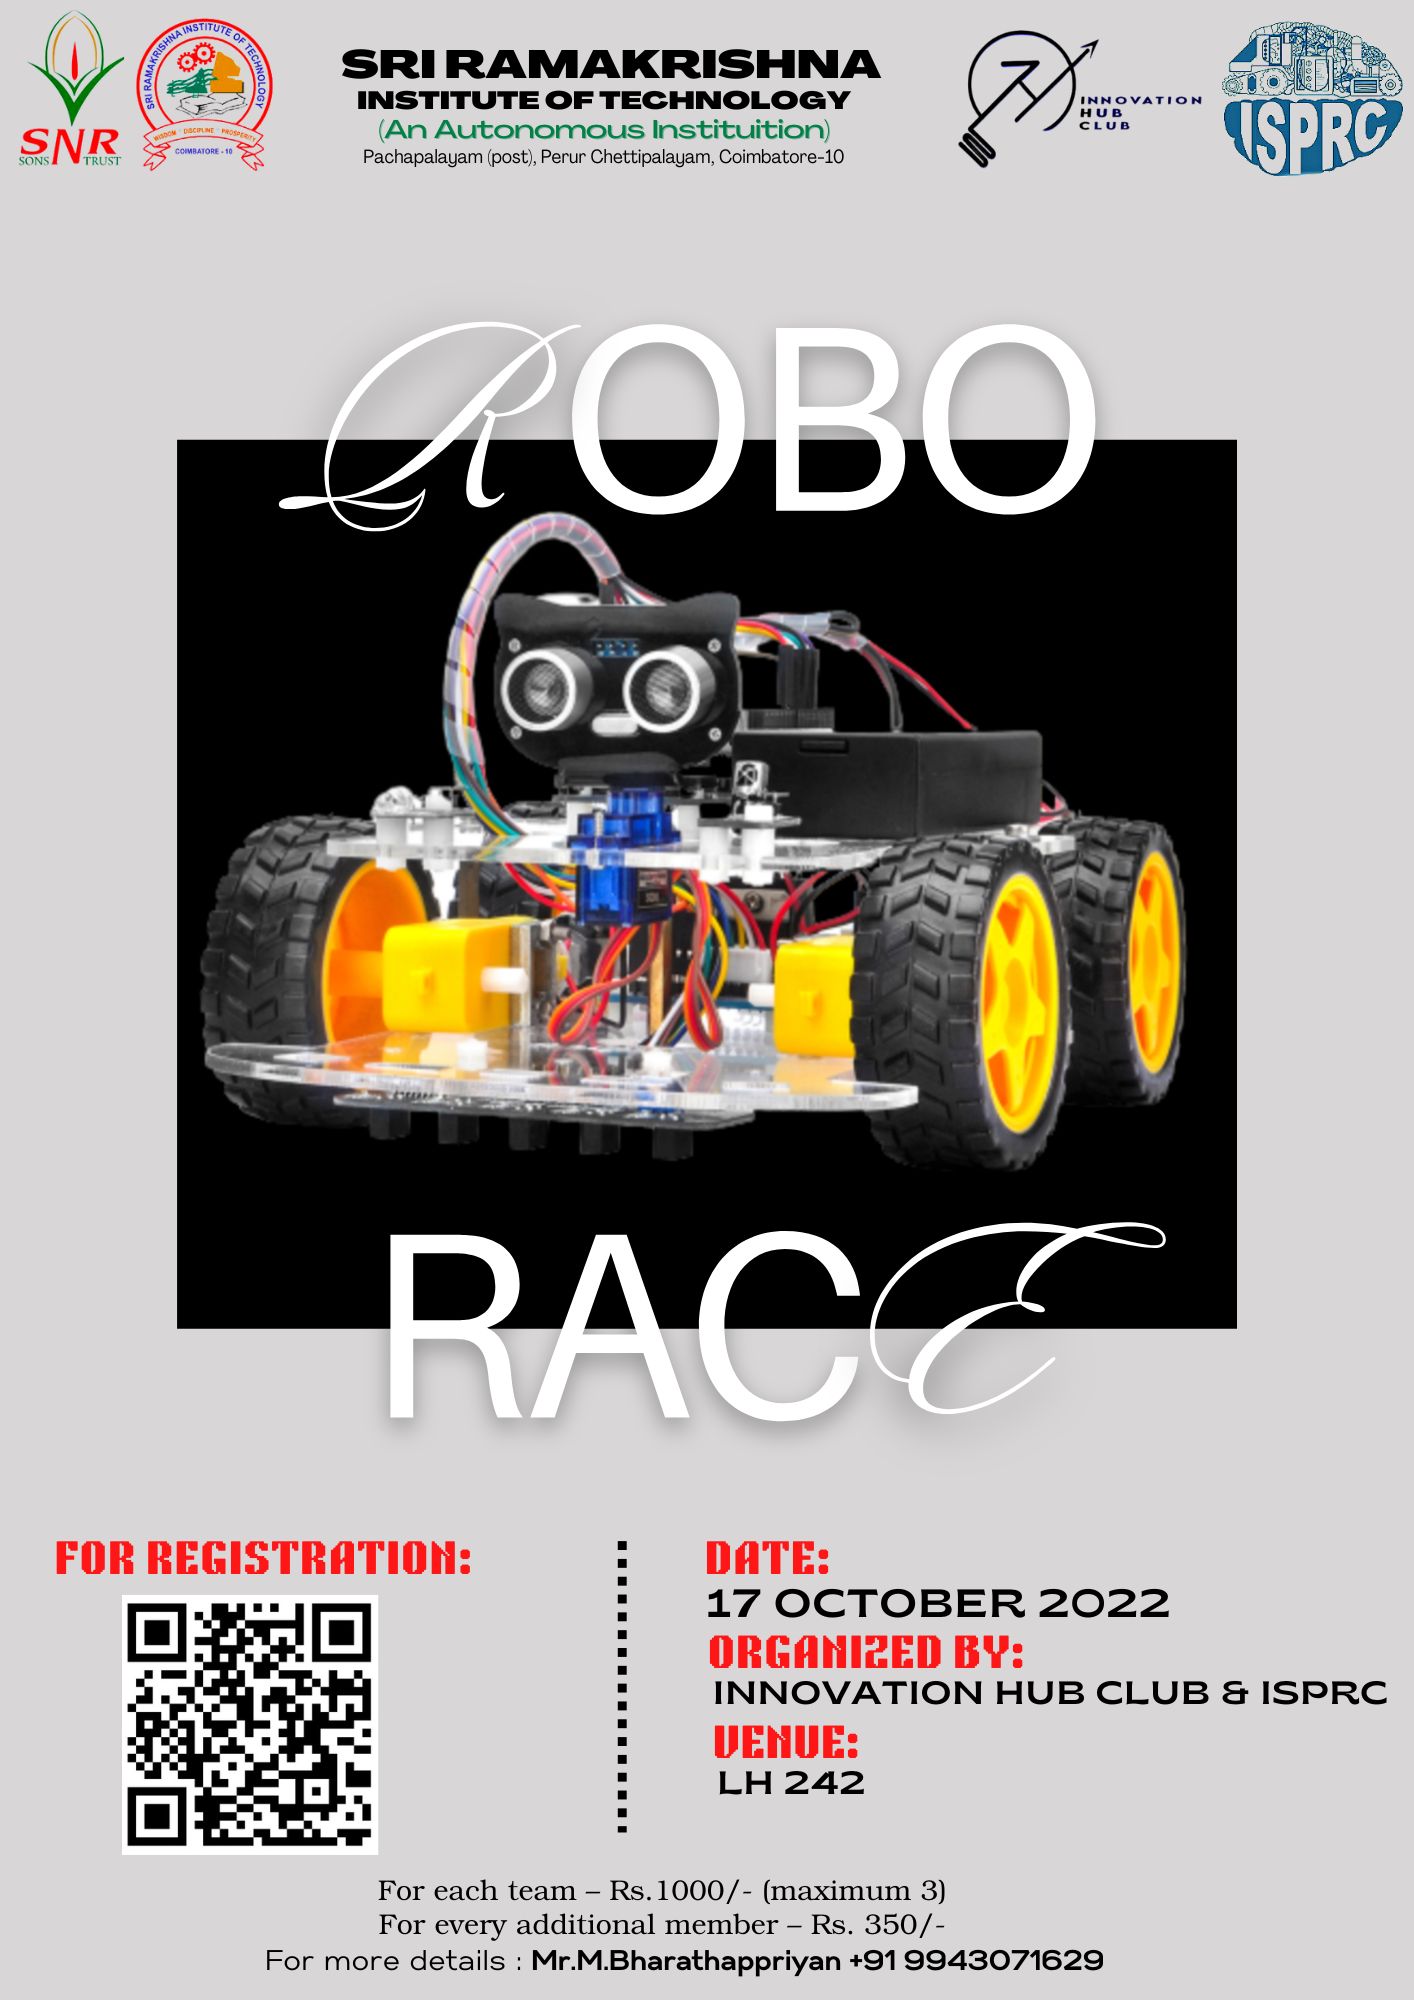 Robo race 2022